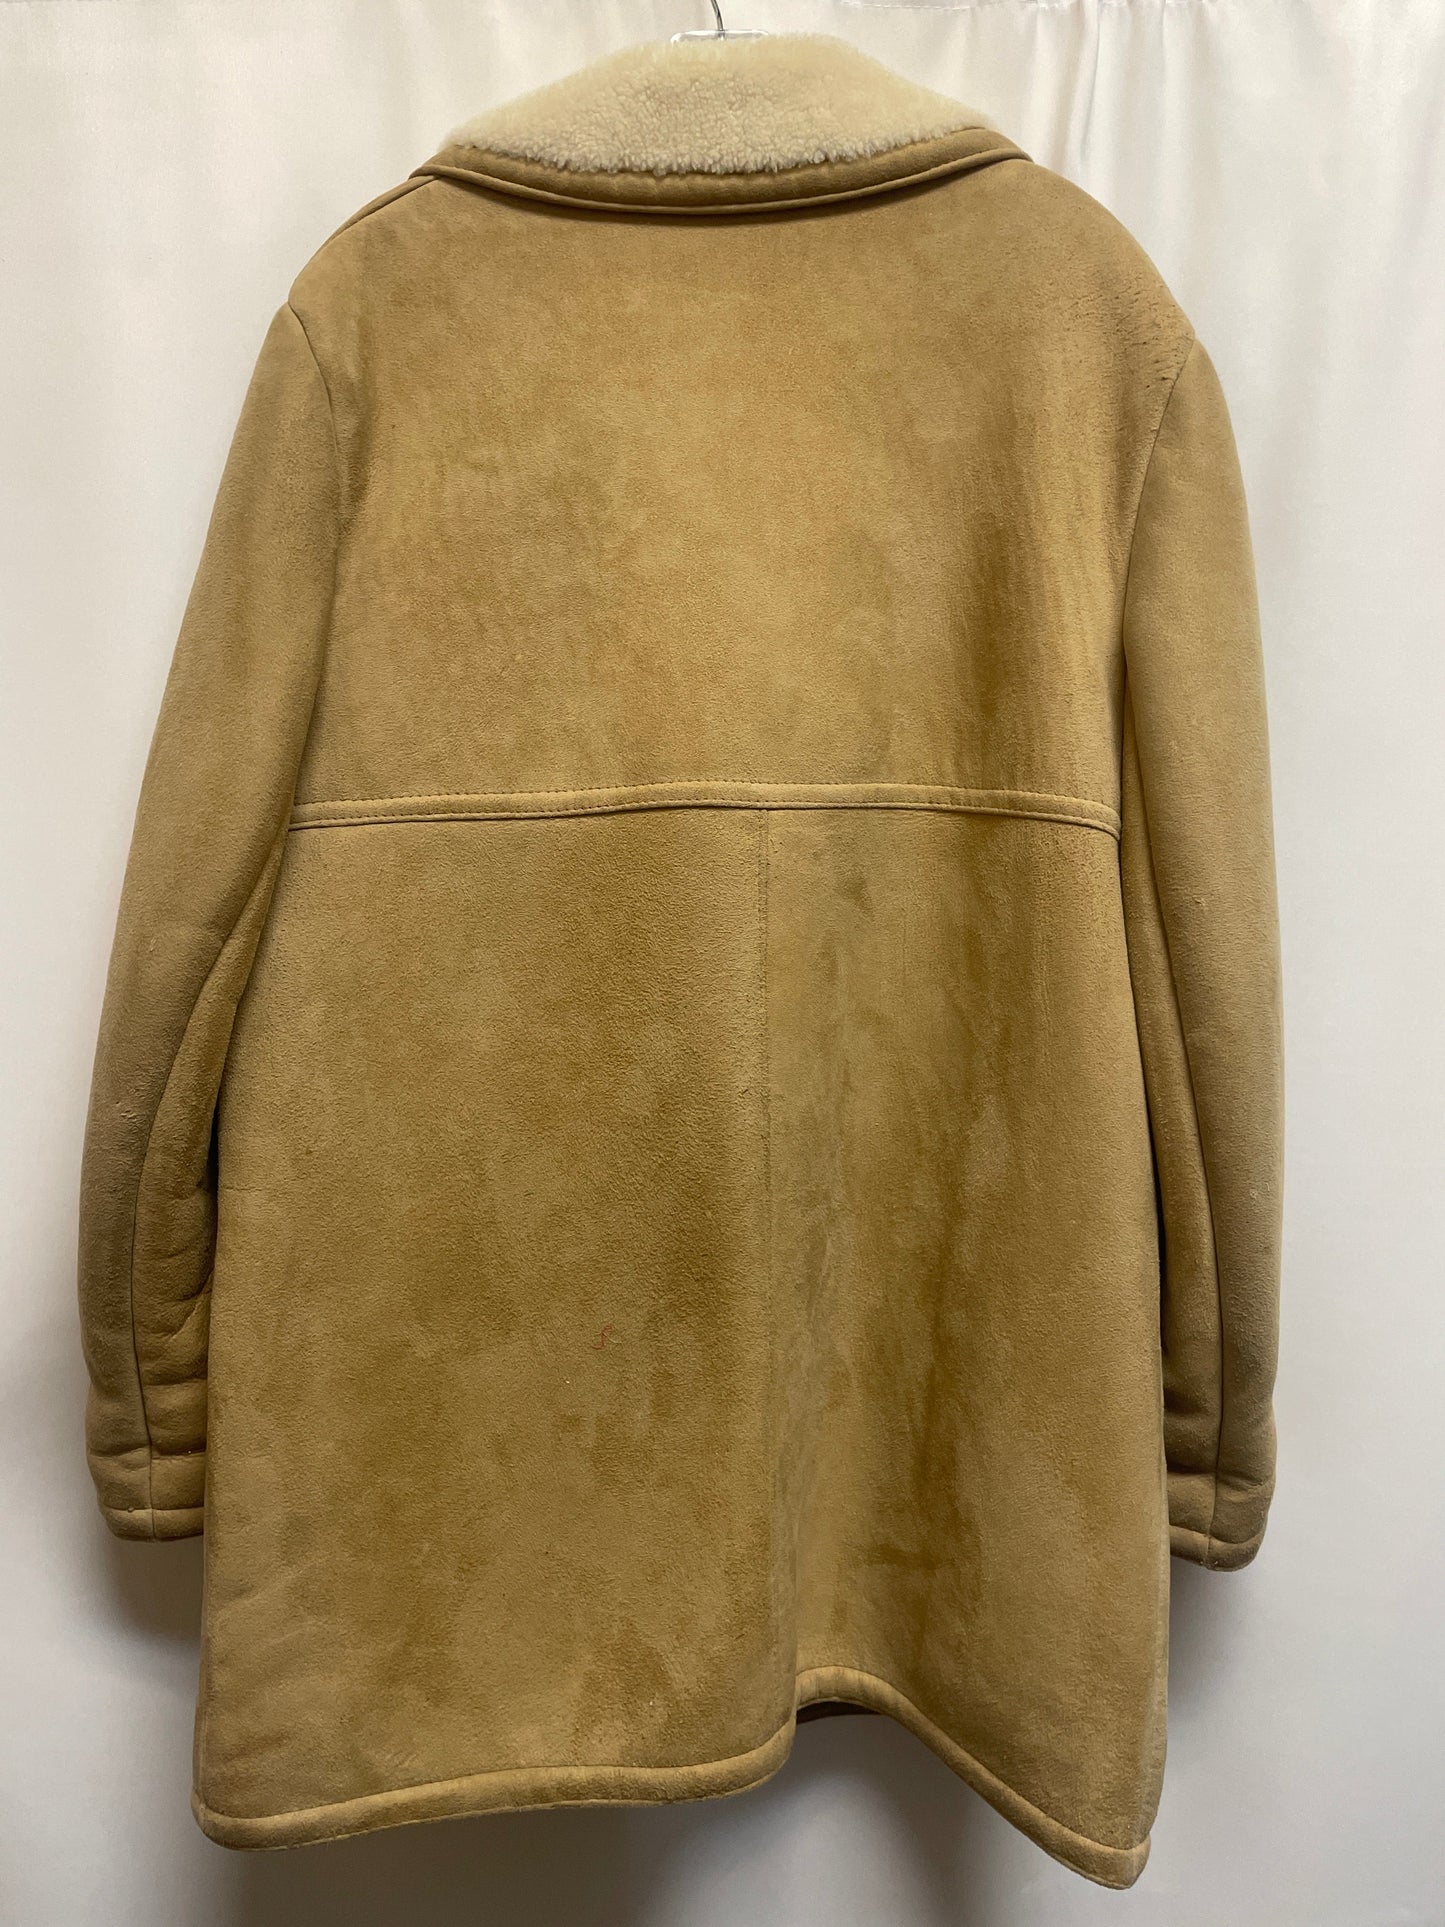 Coat Leather By Cma  Size: 40